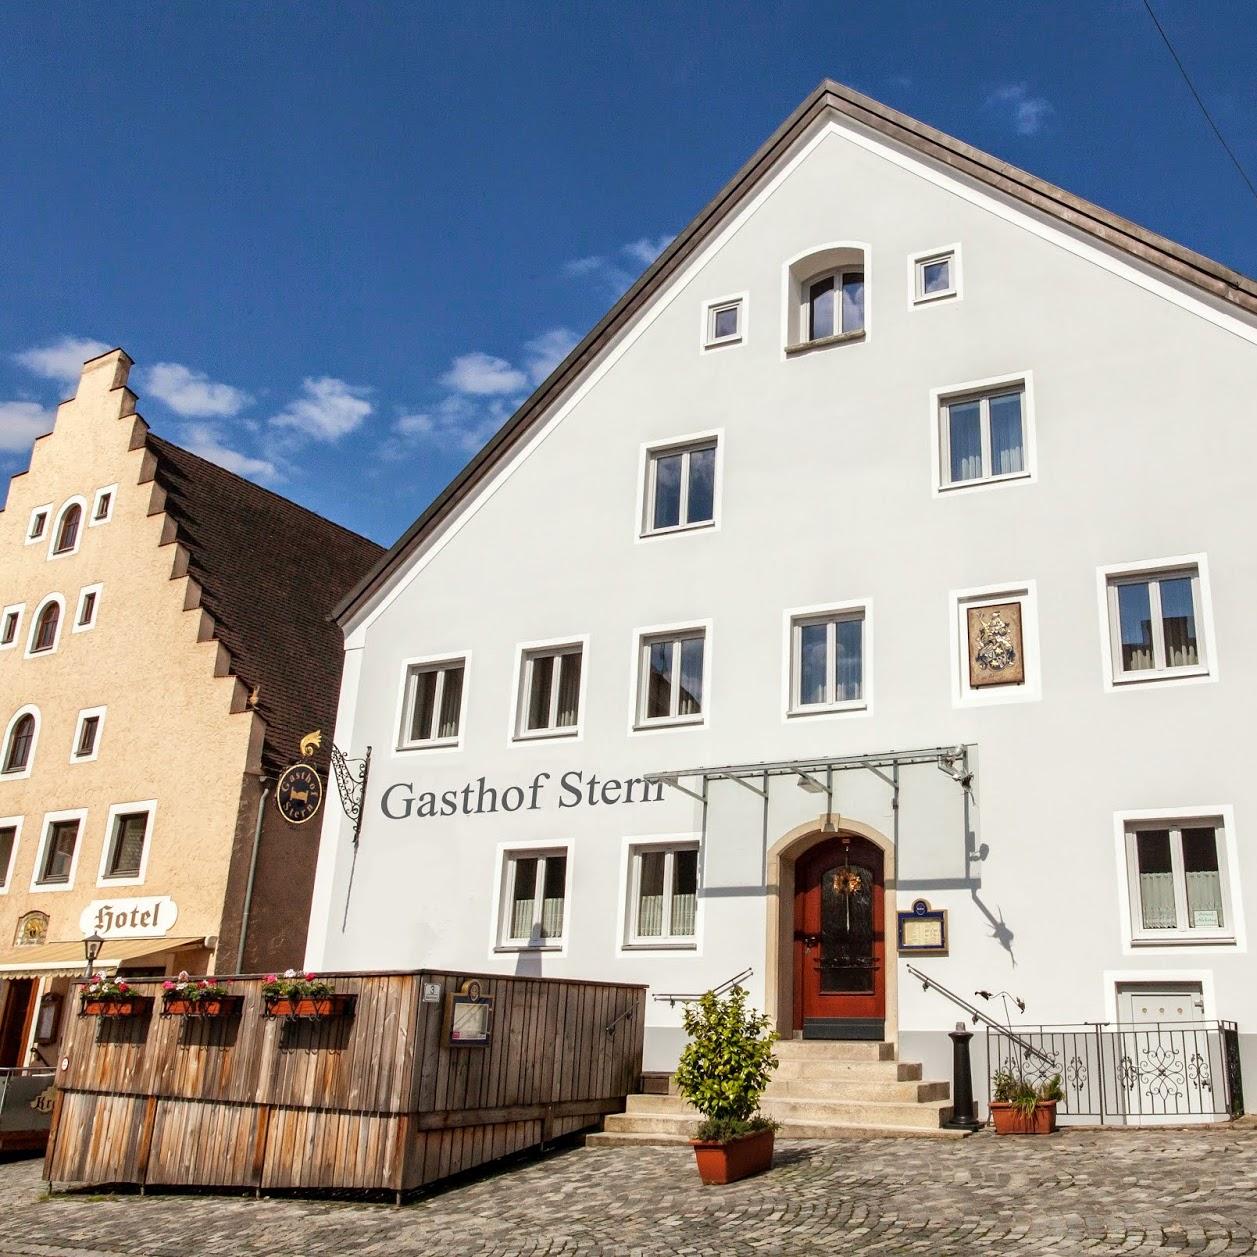 Restaurant "Gasthof Stern" in Greding